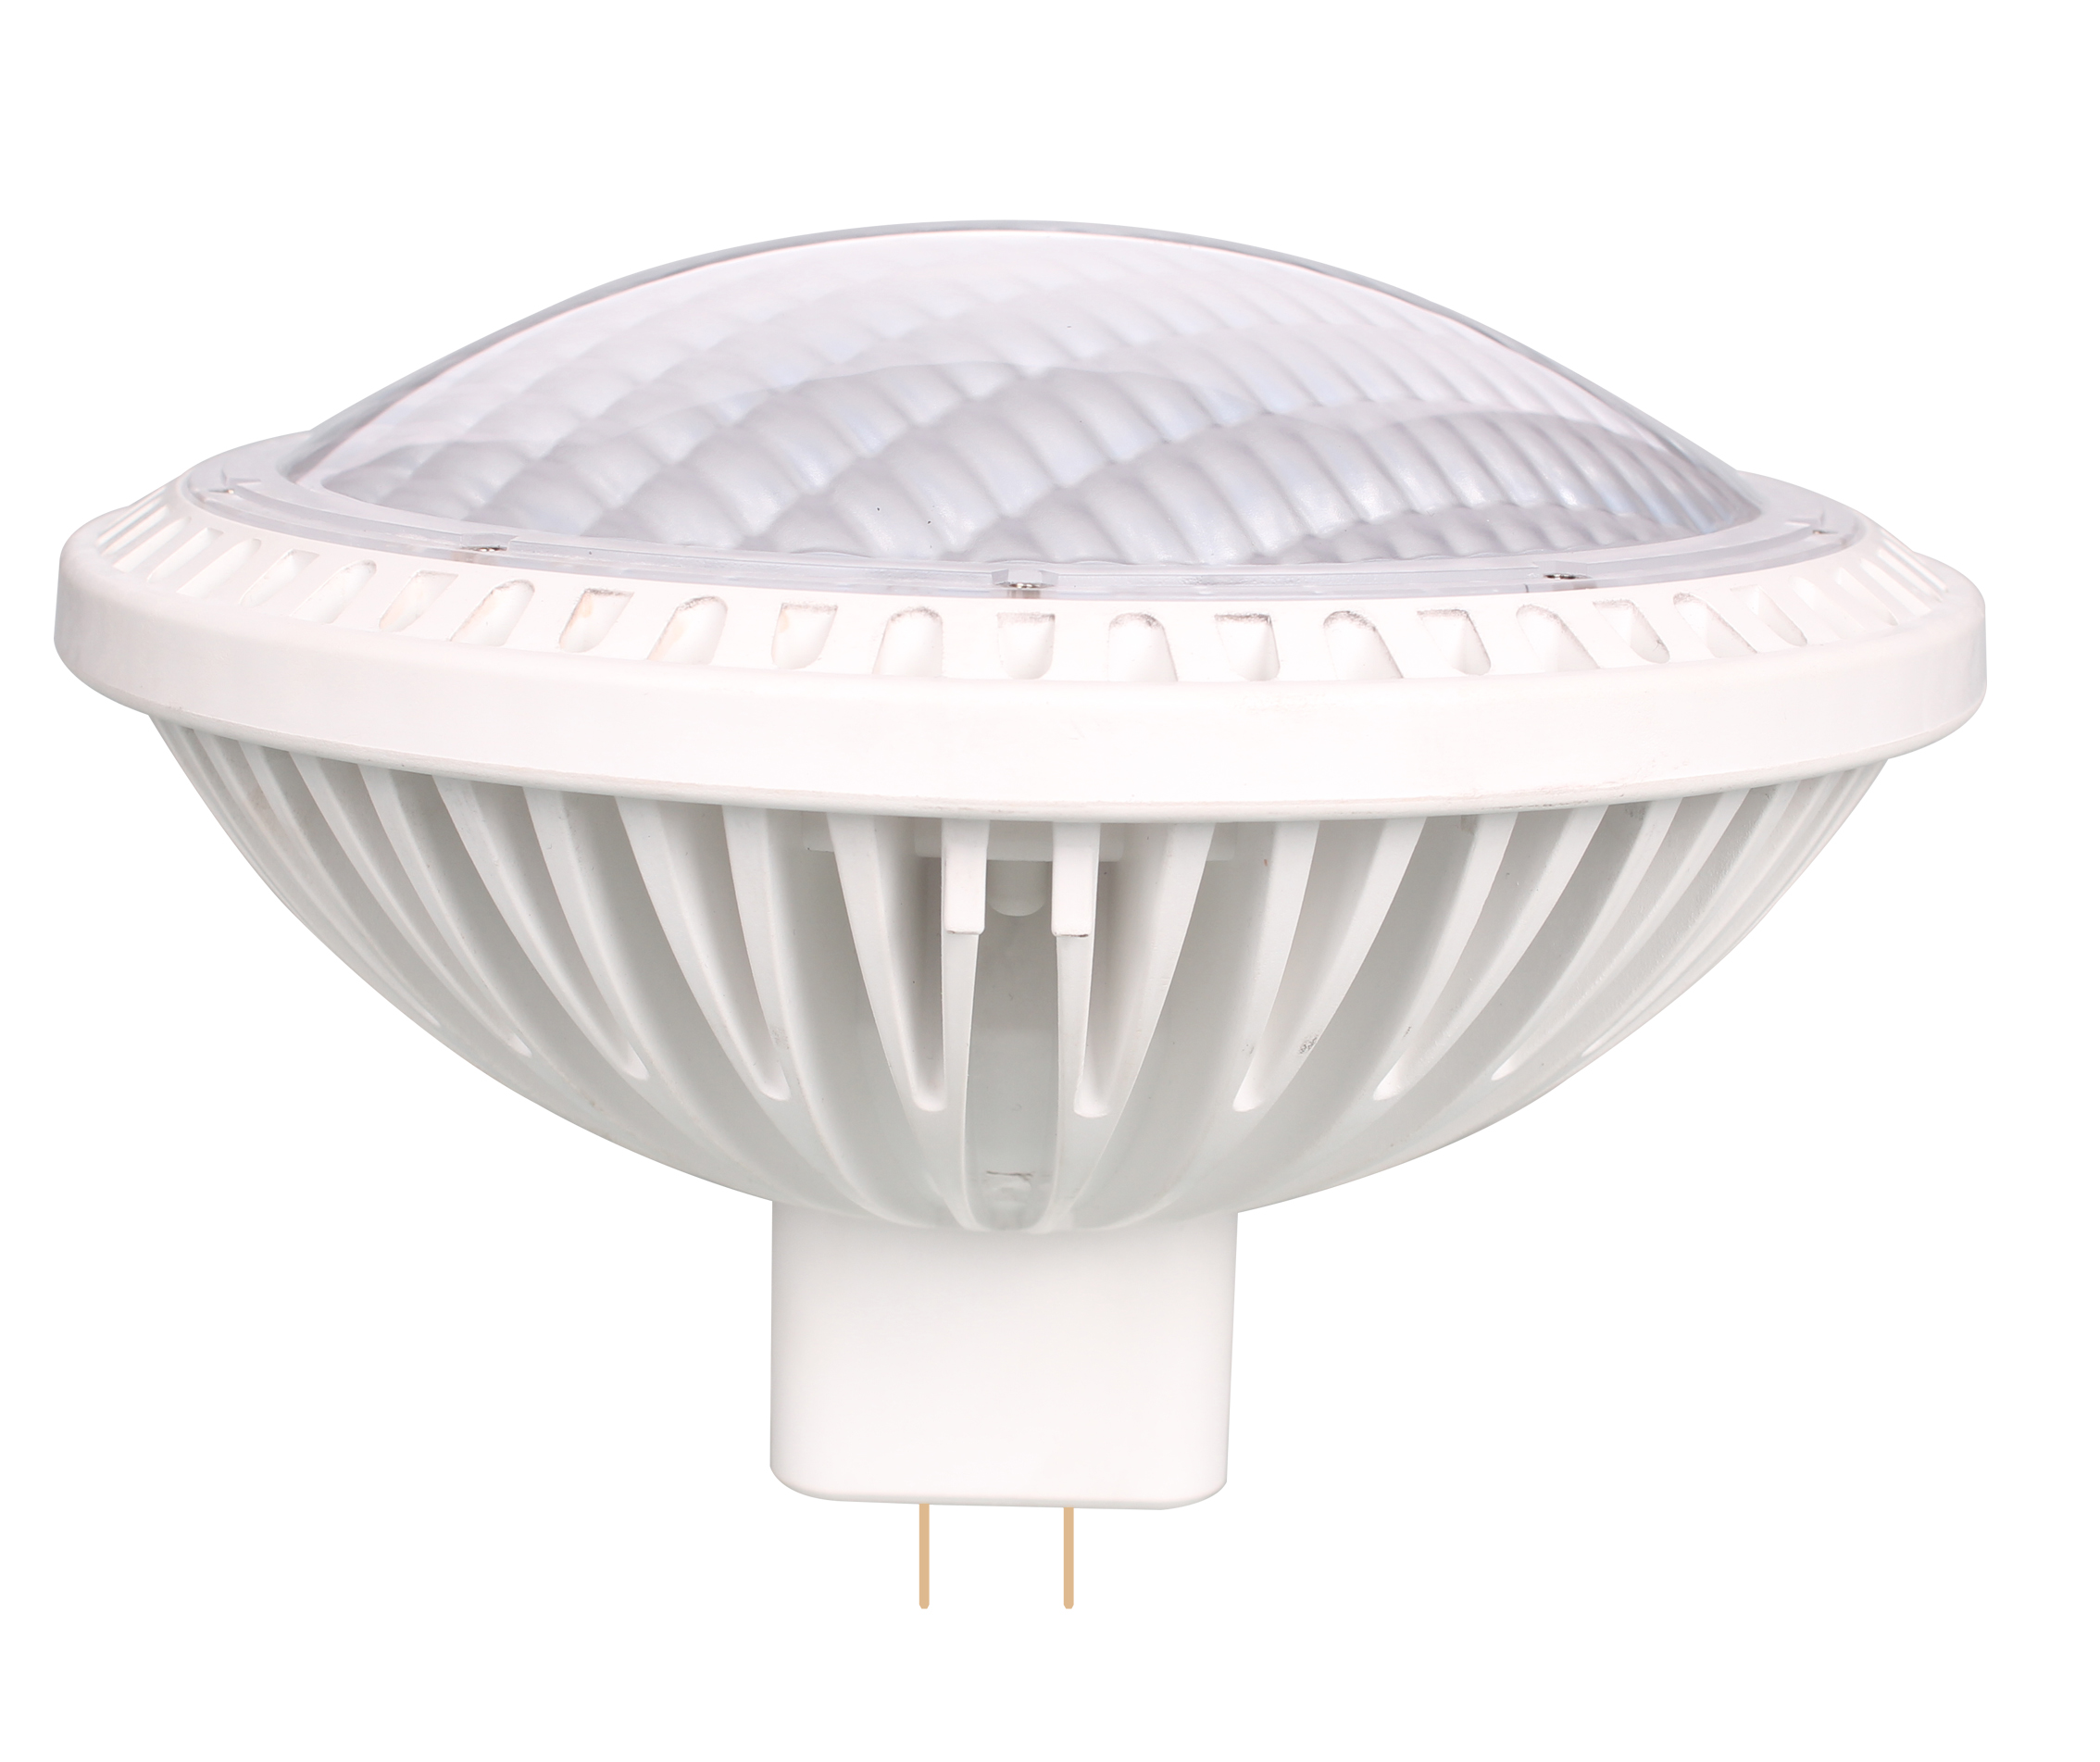 1 x CLEAR PAR 64 500W 230V Very Narrow Spot VNSP Lamp Disco Light Bulb Lamp UK 